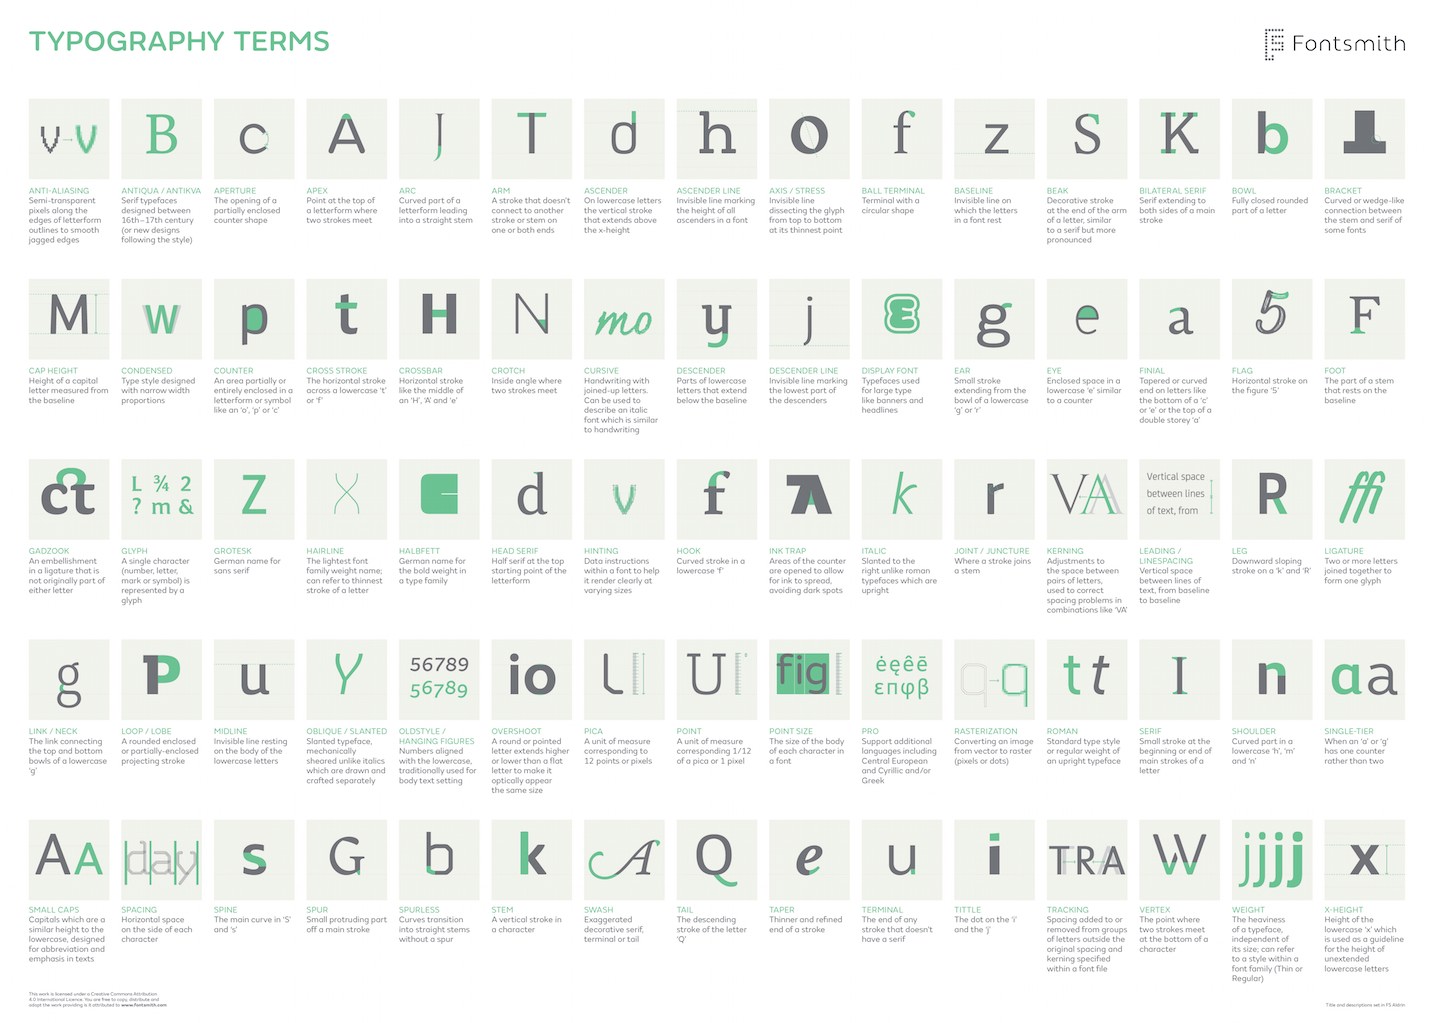 Typographic Terms